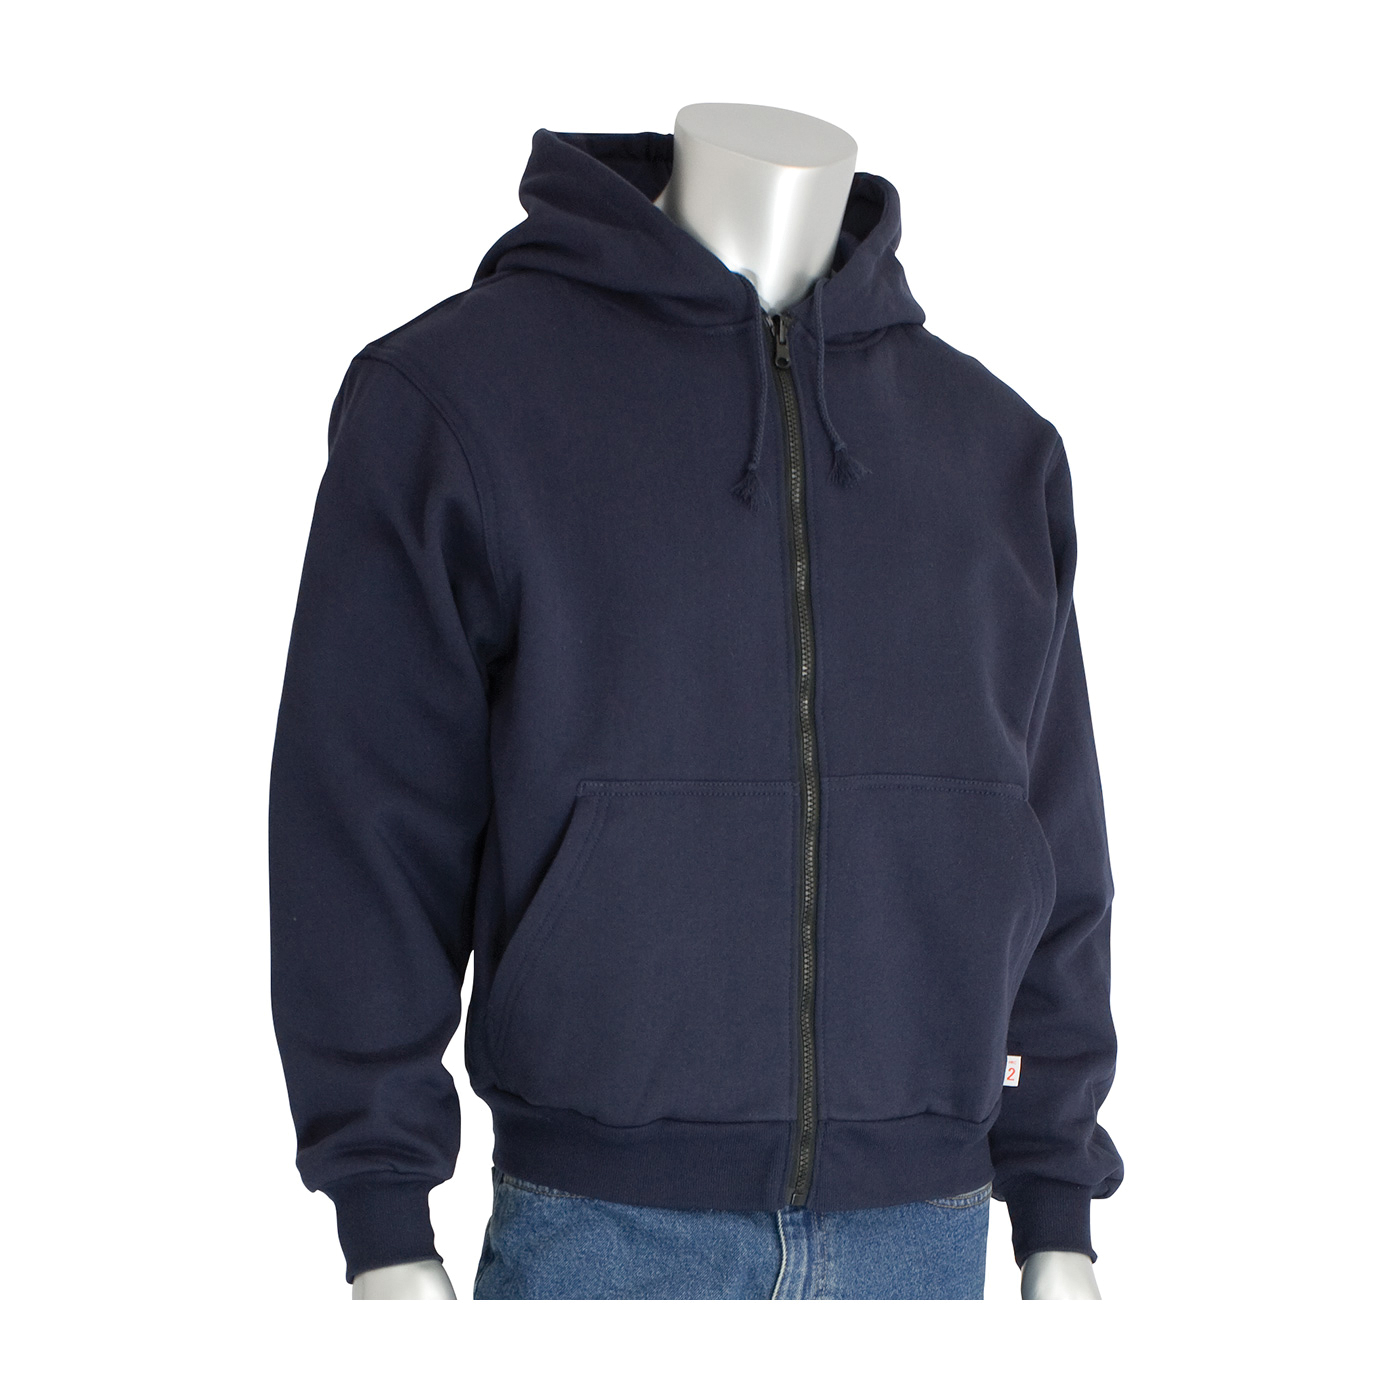 PIP® 385-FRZH-NV/2X Polartec® 385-FRZH Arc and Flame Resistant Sweatshirt, 2XL, Navy, FR Fleece Knit/100% Cotton, 30-1/2 in Regular, 31-1/2 in Tall L